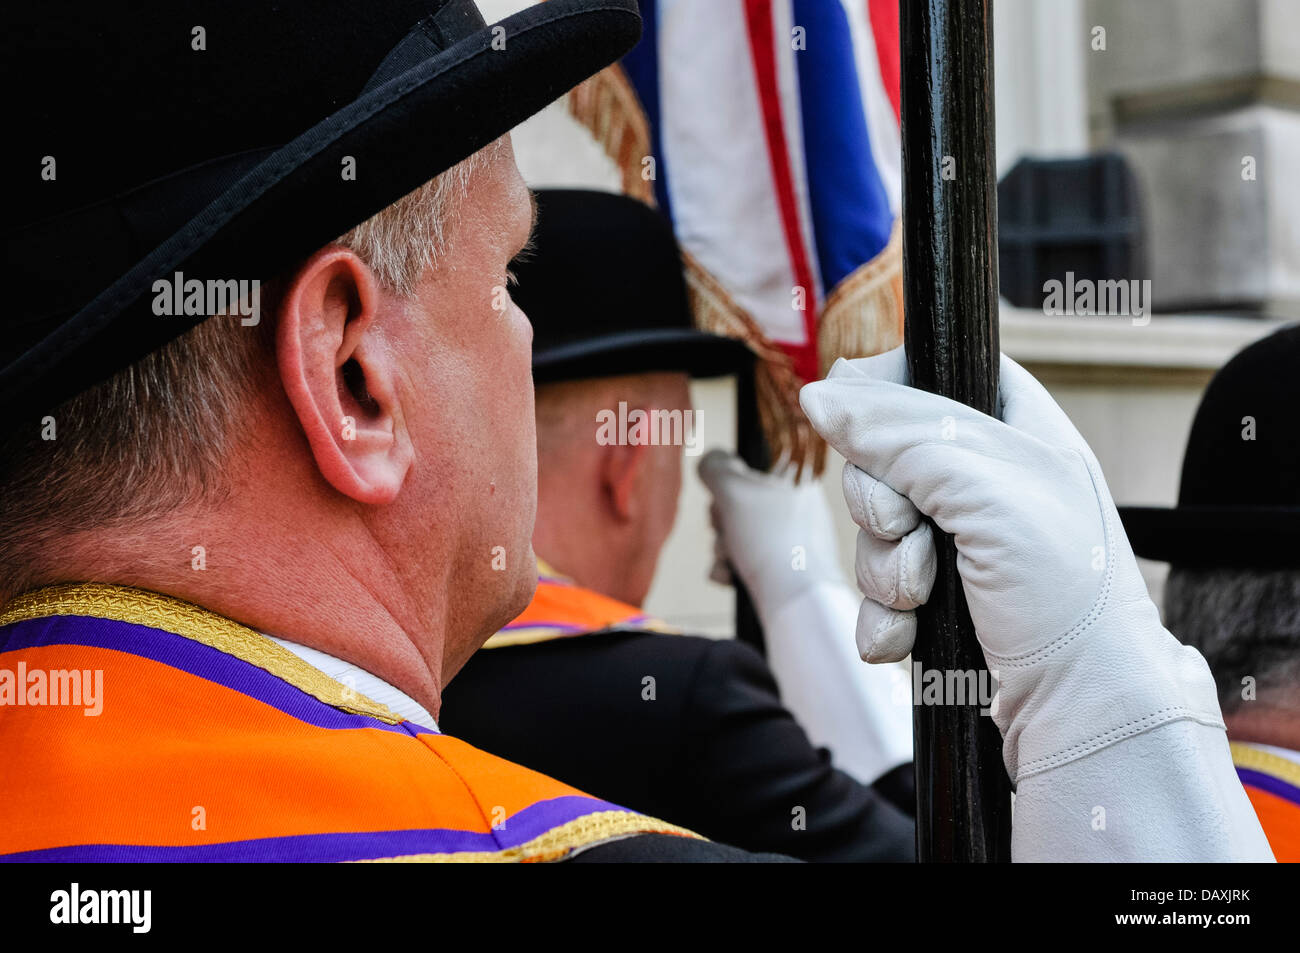 An Orangeman wearing an Orange sash and leather glove holds a flag pole Stock Photo